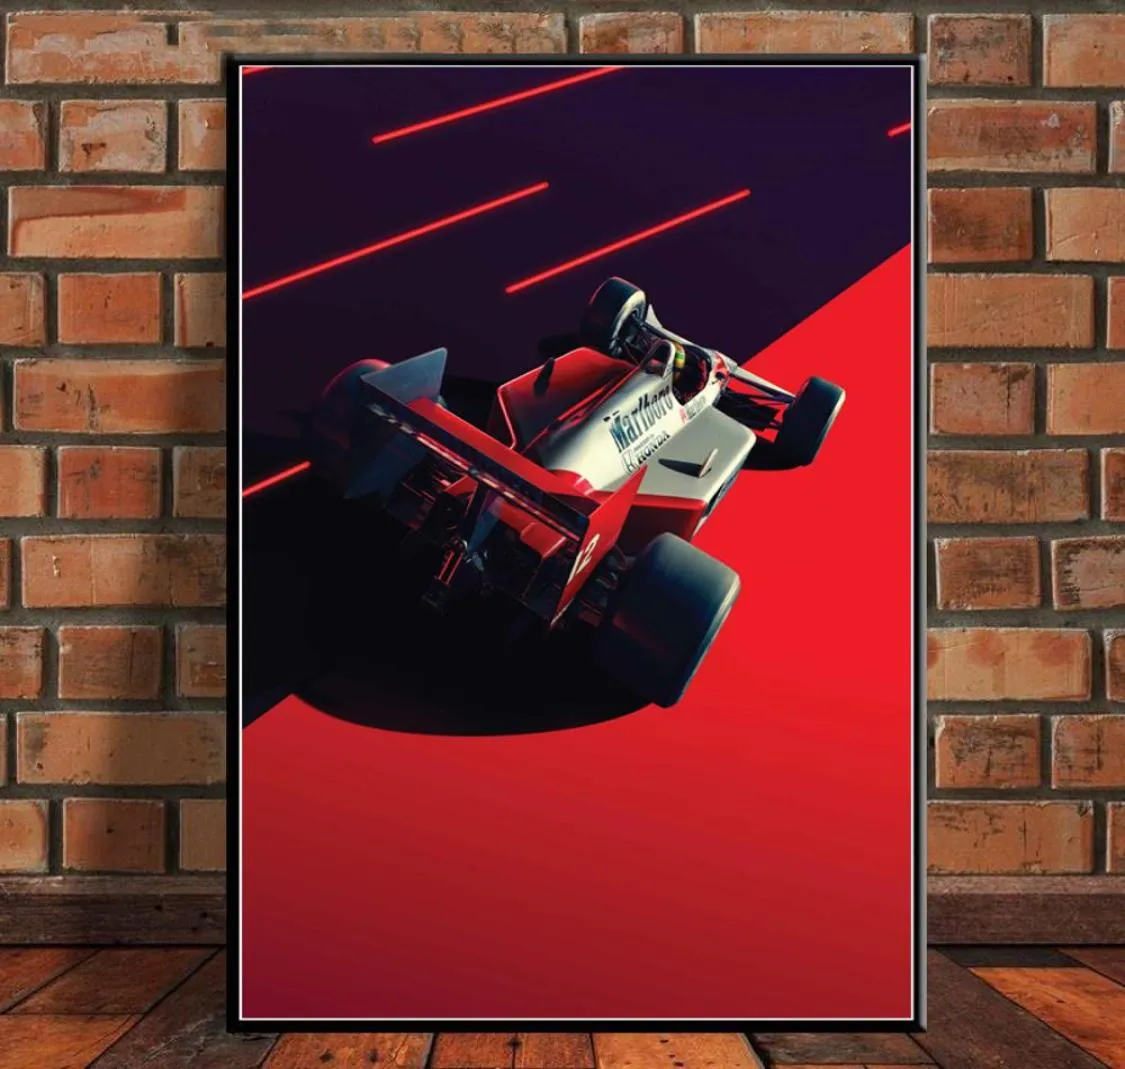 Hot Mclaren Del Mondo Ayrton Senna F1 Formula Auto Da Corsa Poster Wall Art Canvas Immagine Pittura Moderna Per La Casa Room Decor9828410